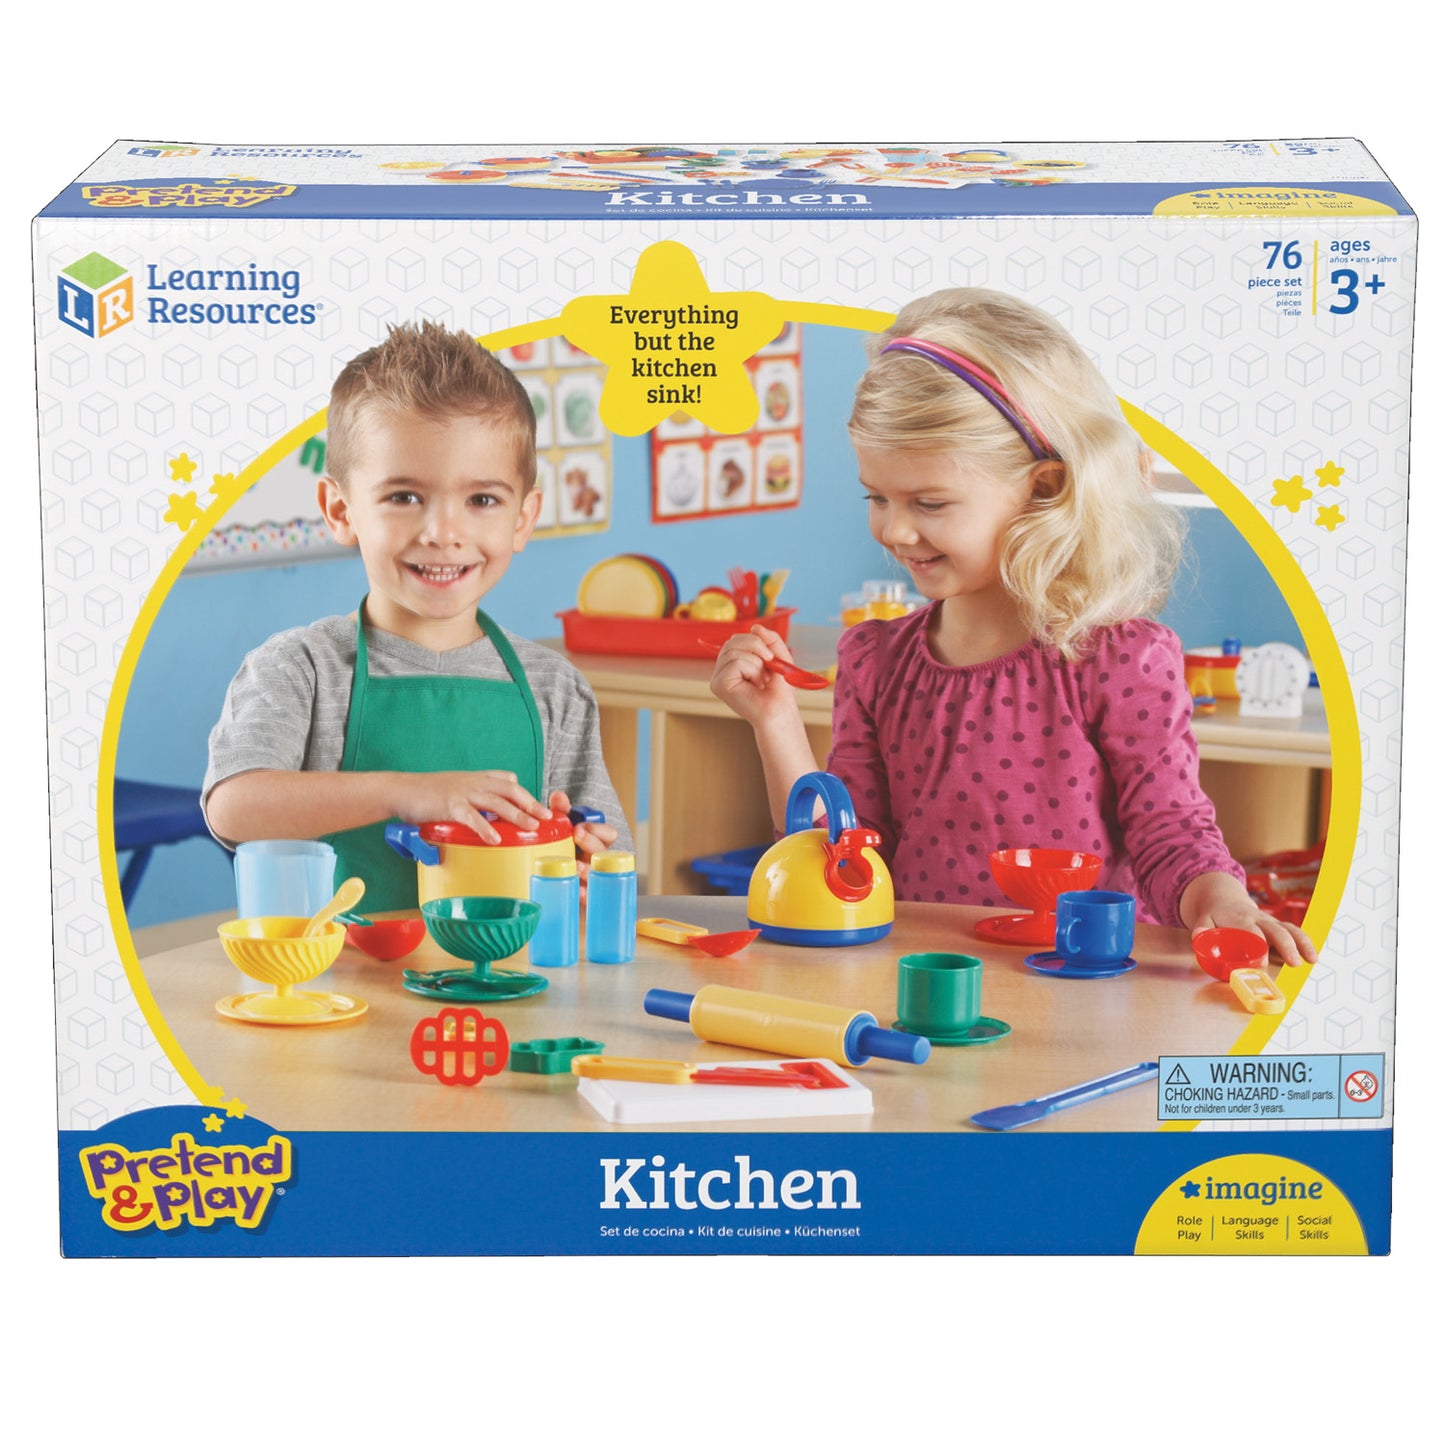 Pretend & Play Kitchen Set